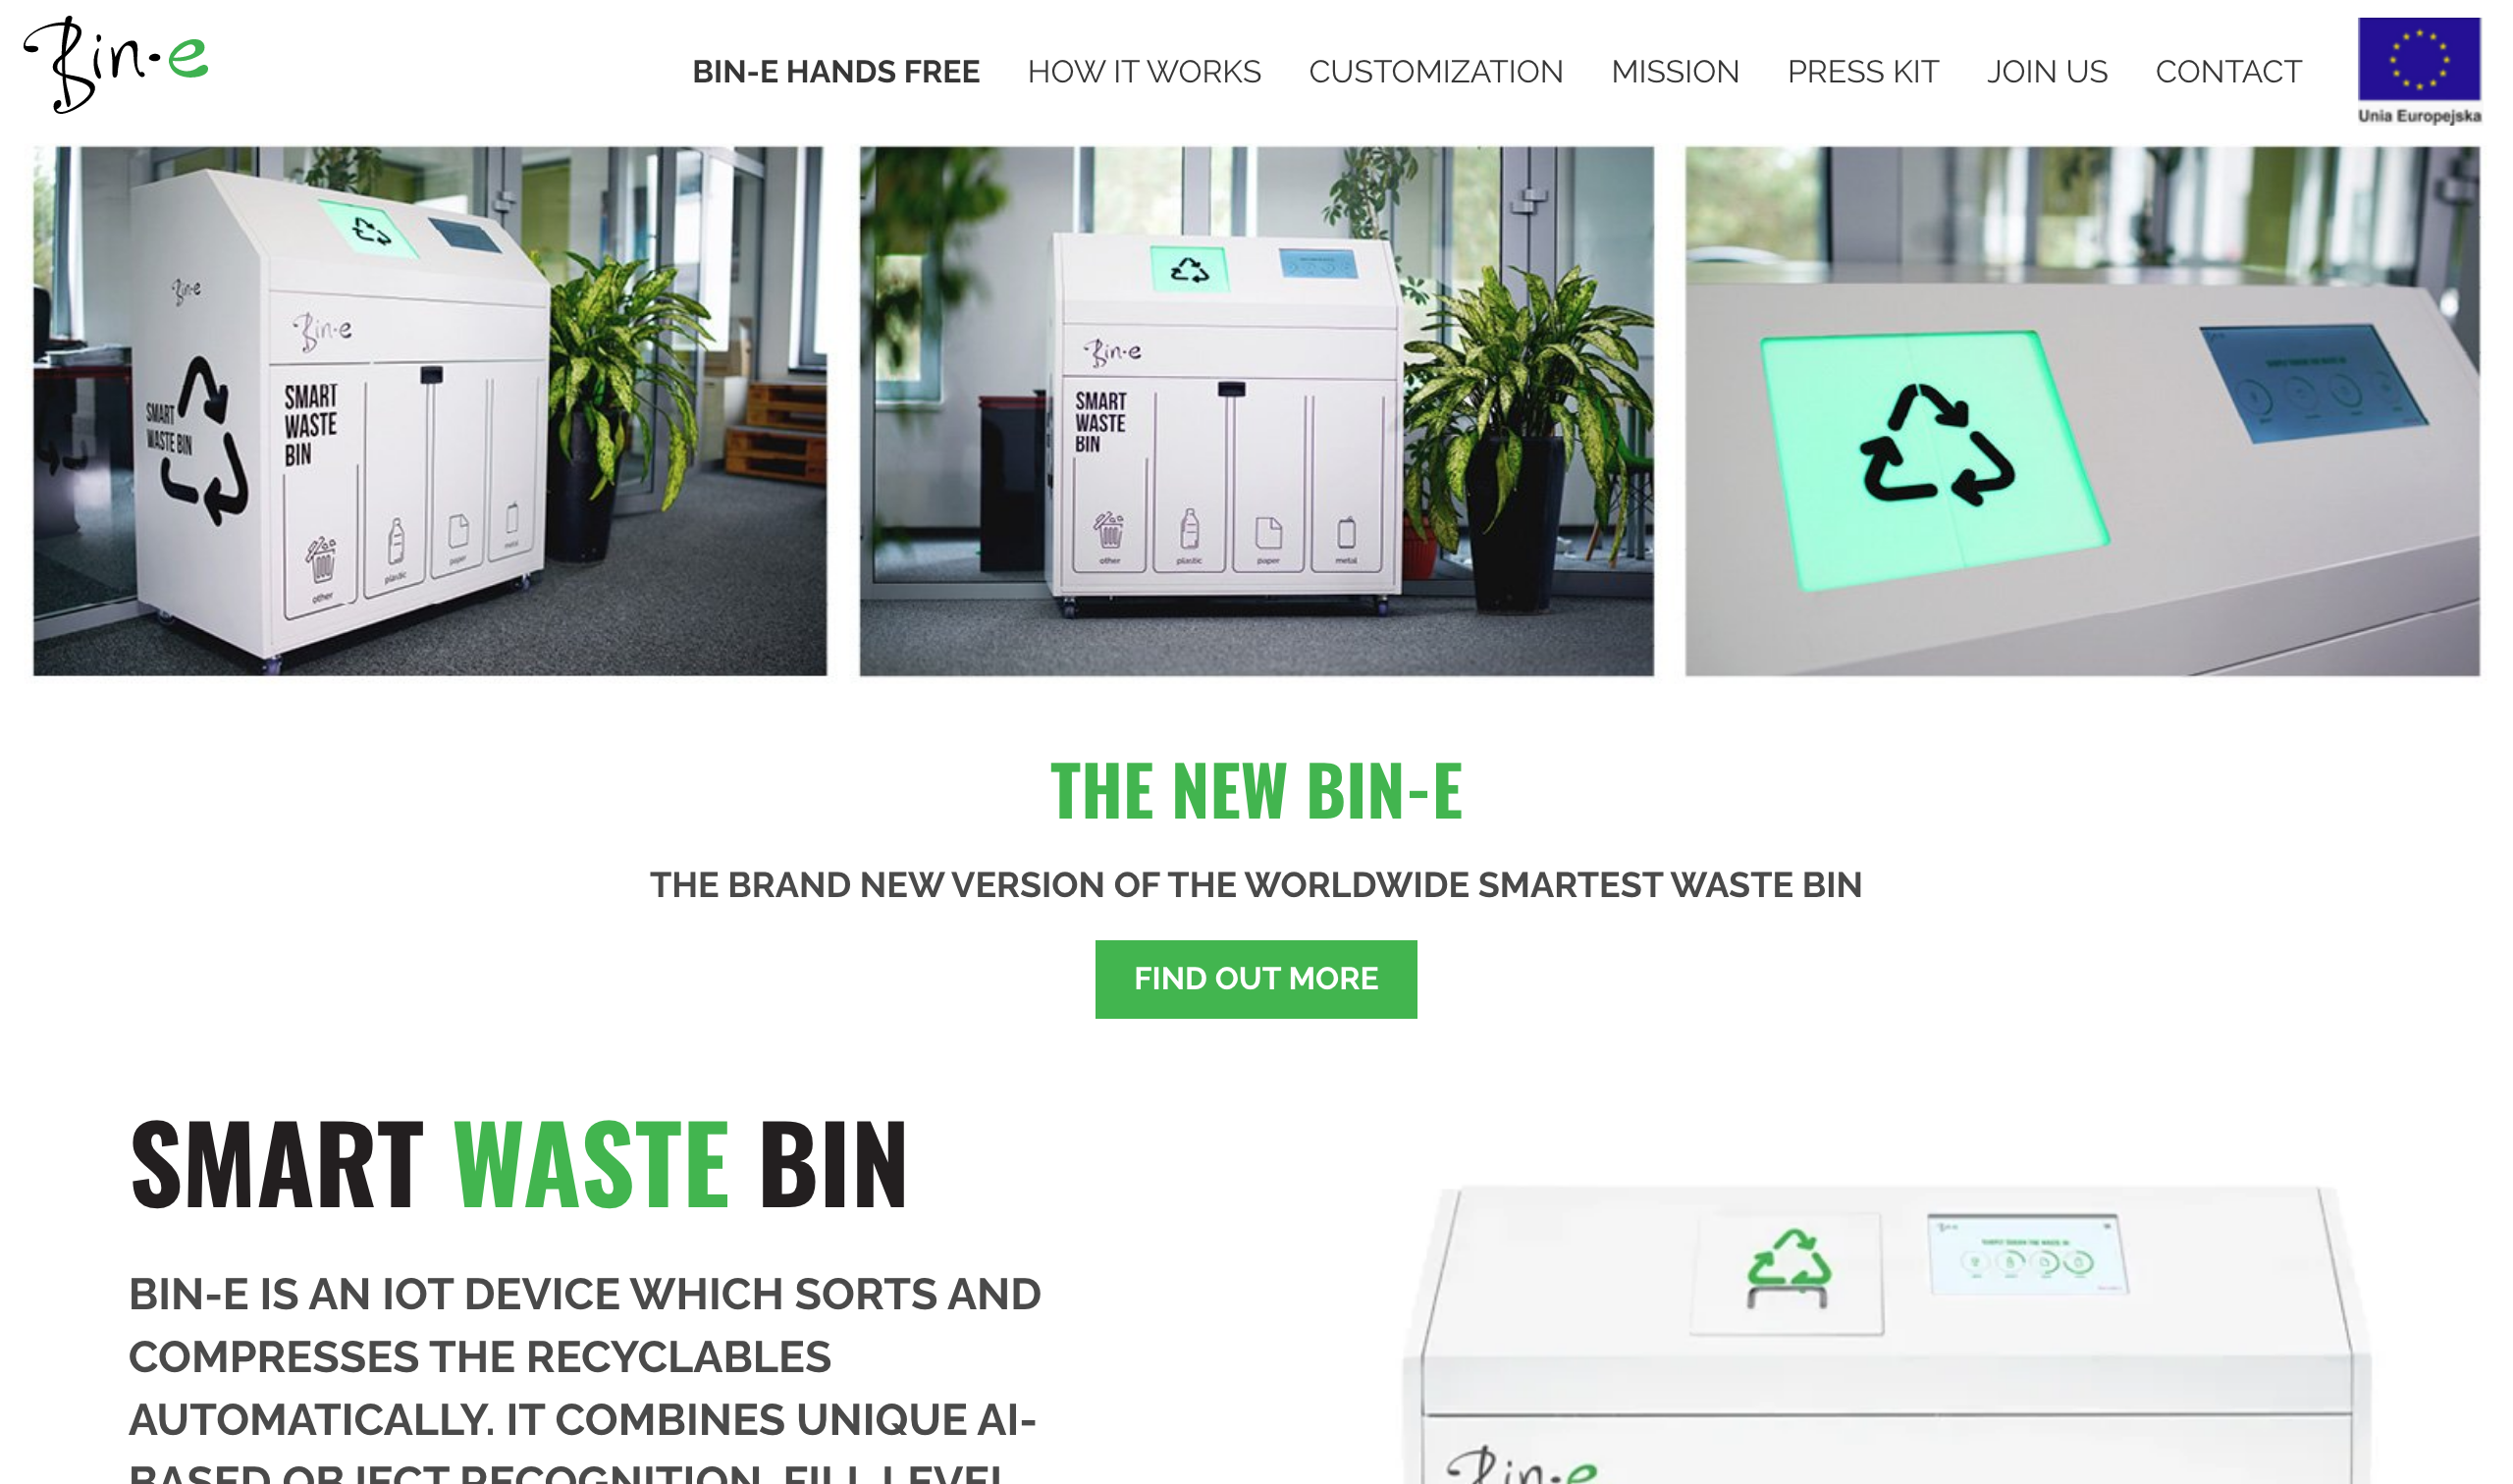 Bin-e Waste Management System